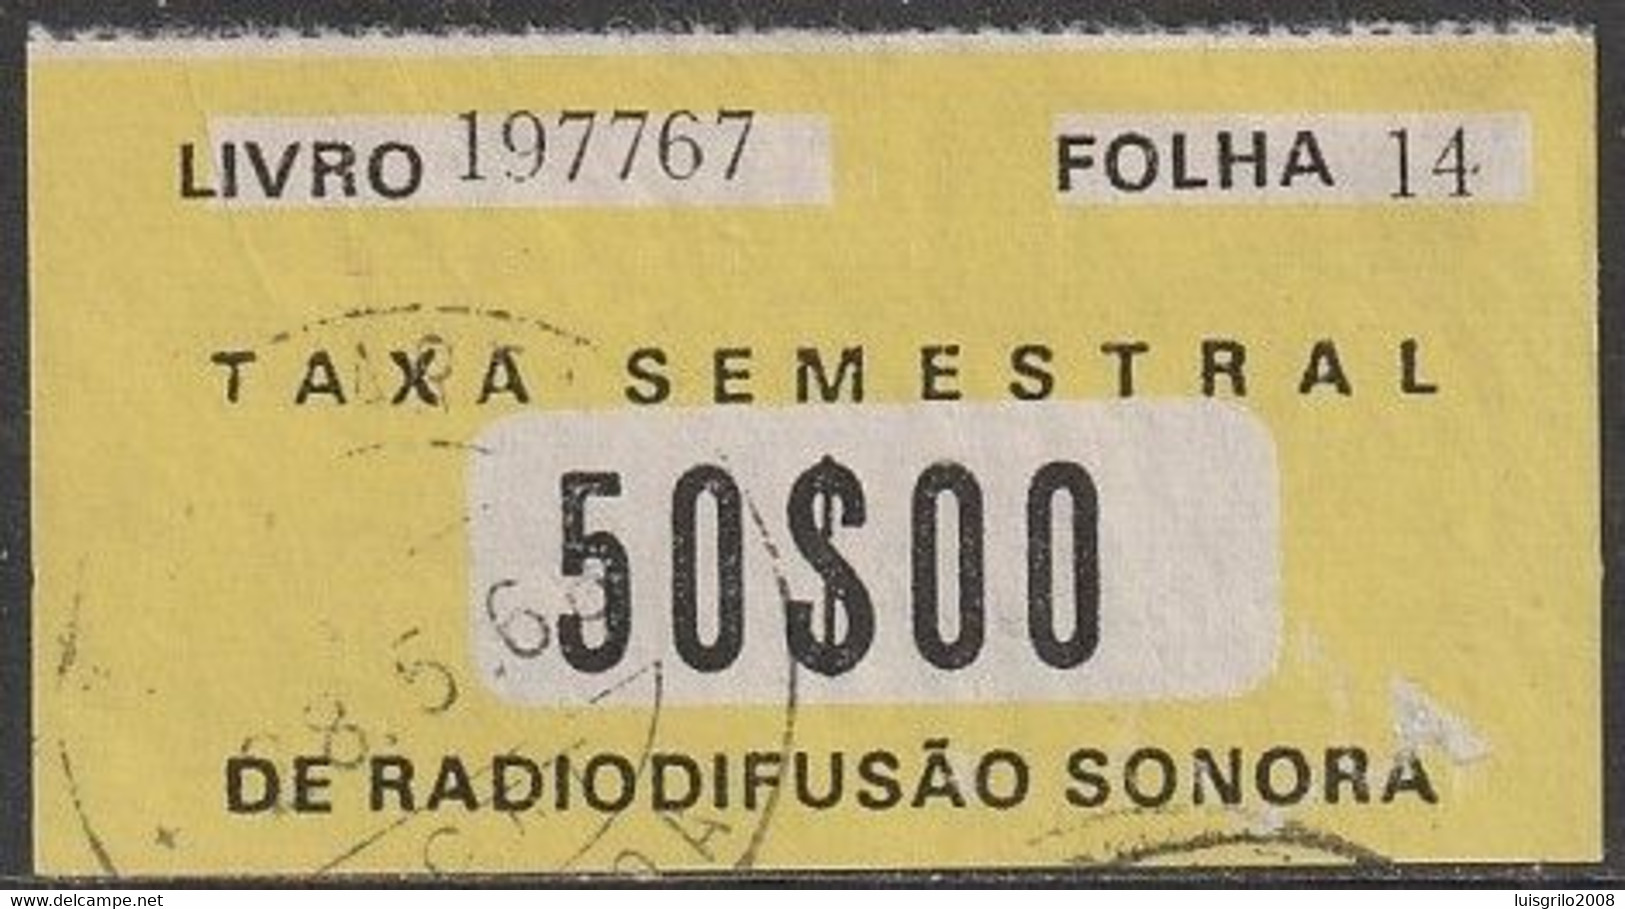 Fiscal/ Revenue, Portugal - Tax/ Taxa De Radiodifusão Sonora -|- 50$00, 1961 - Gebraucht